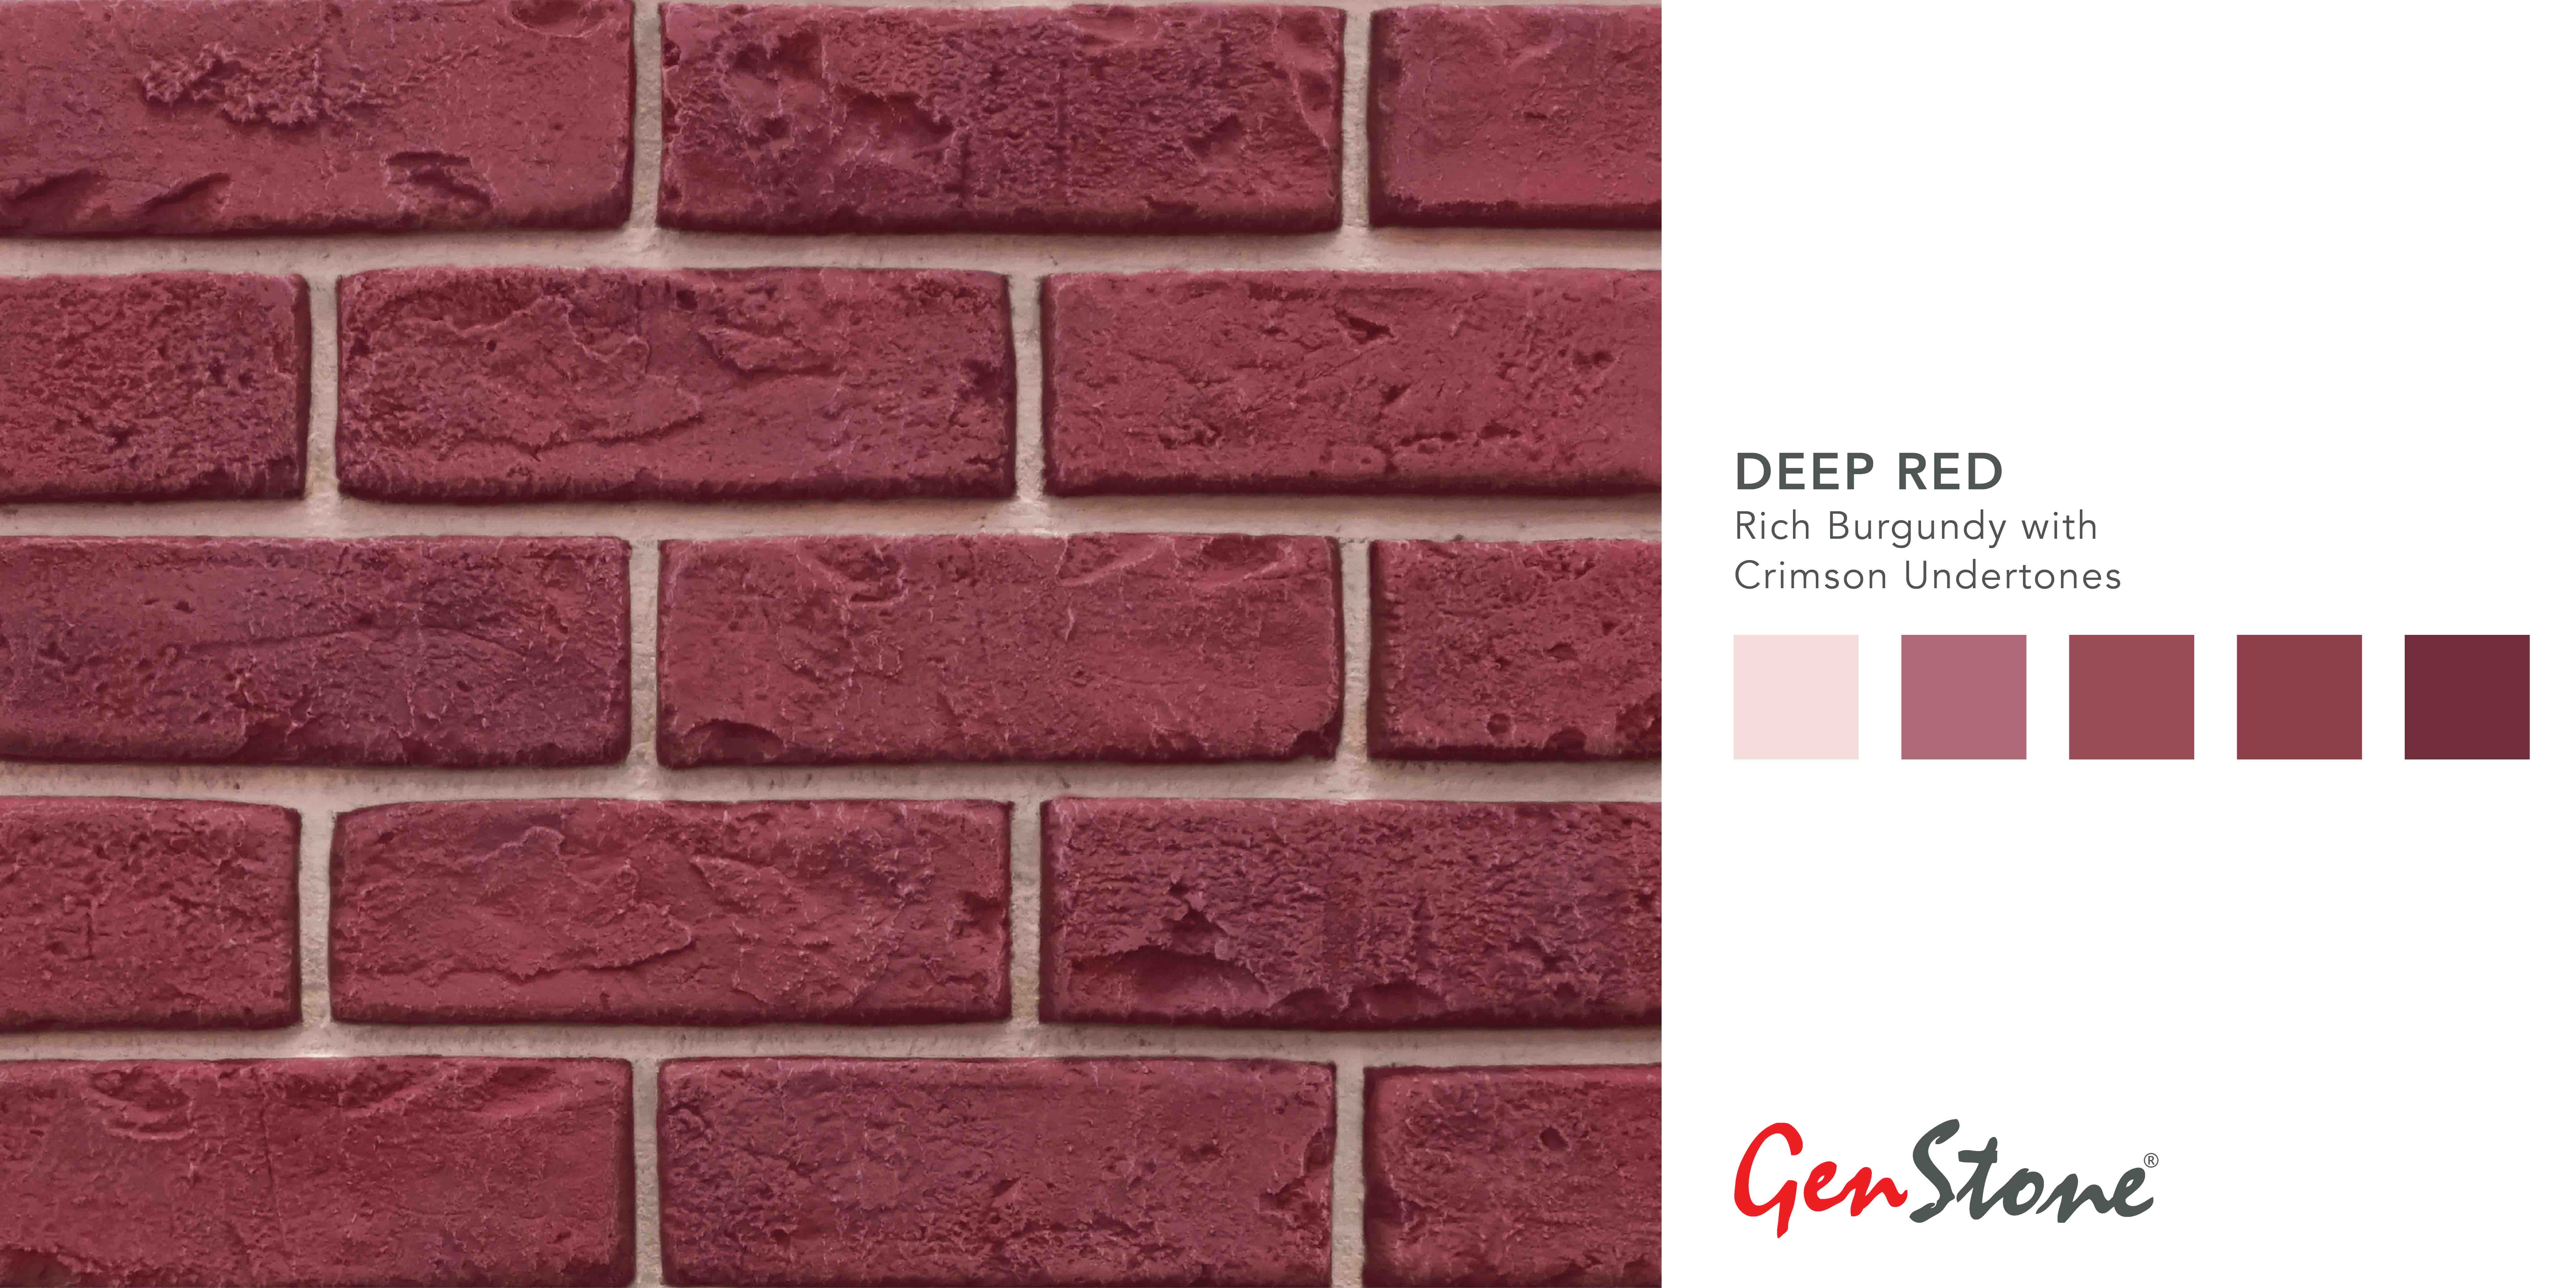 GenStone Deep Red Brick Profile